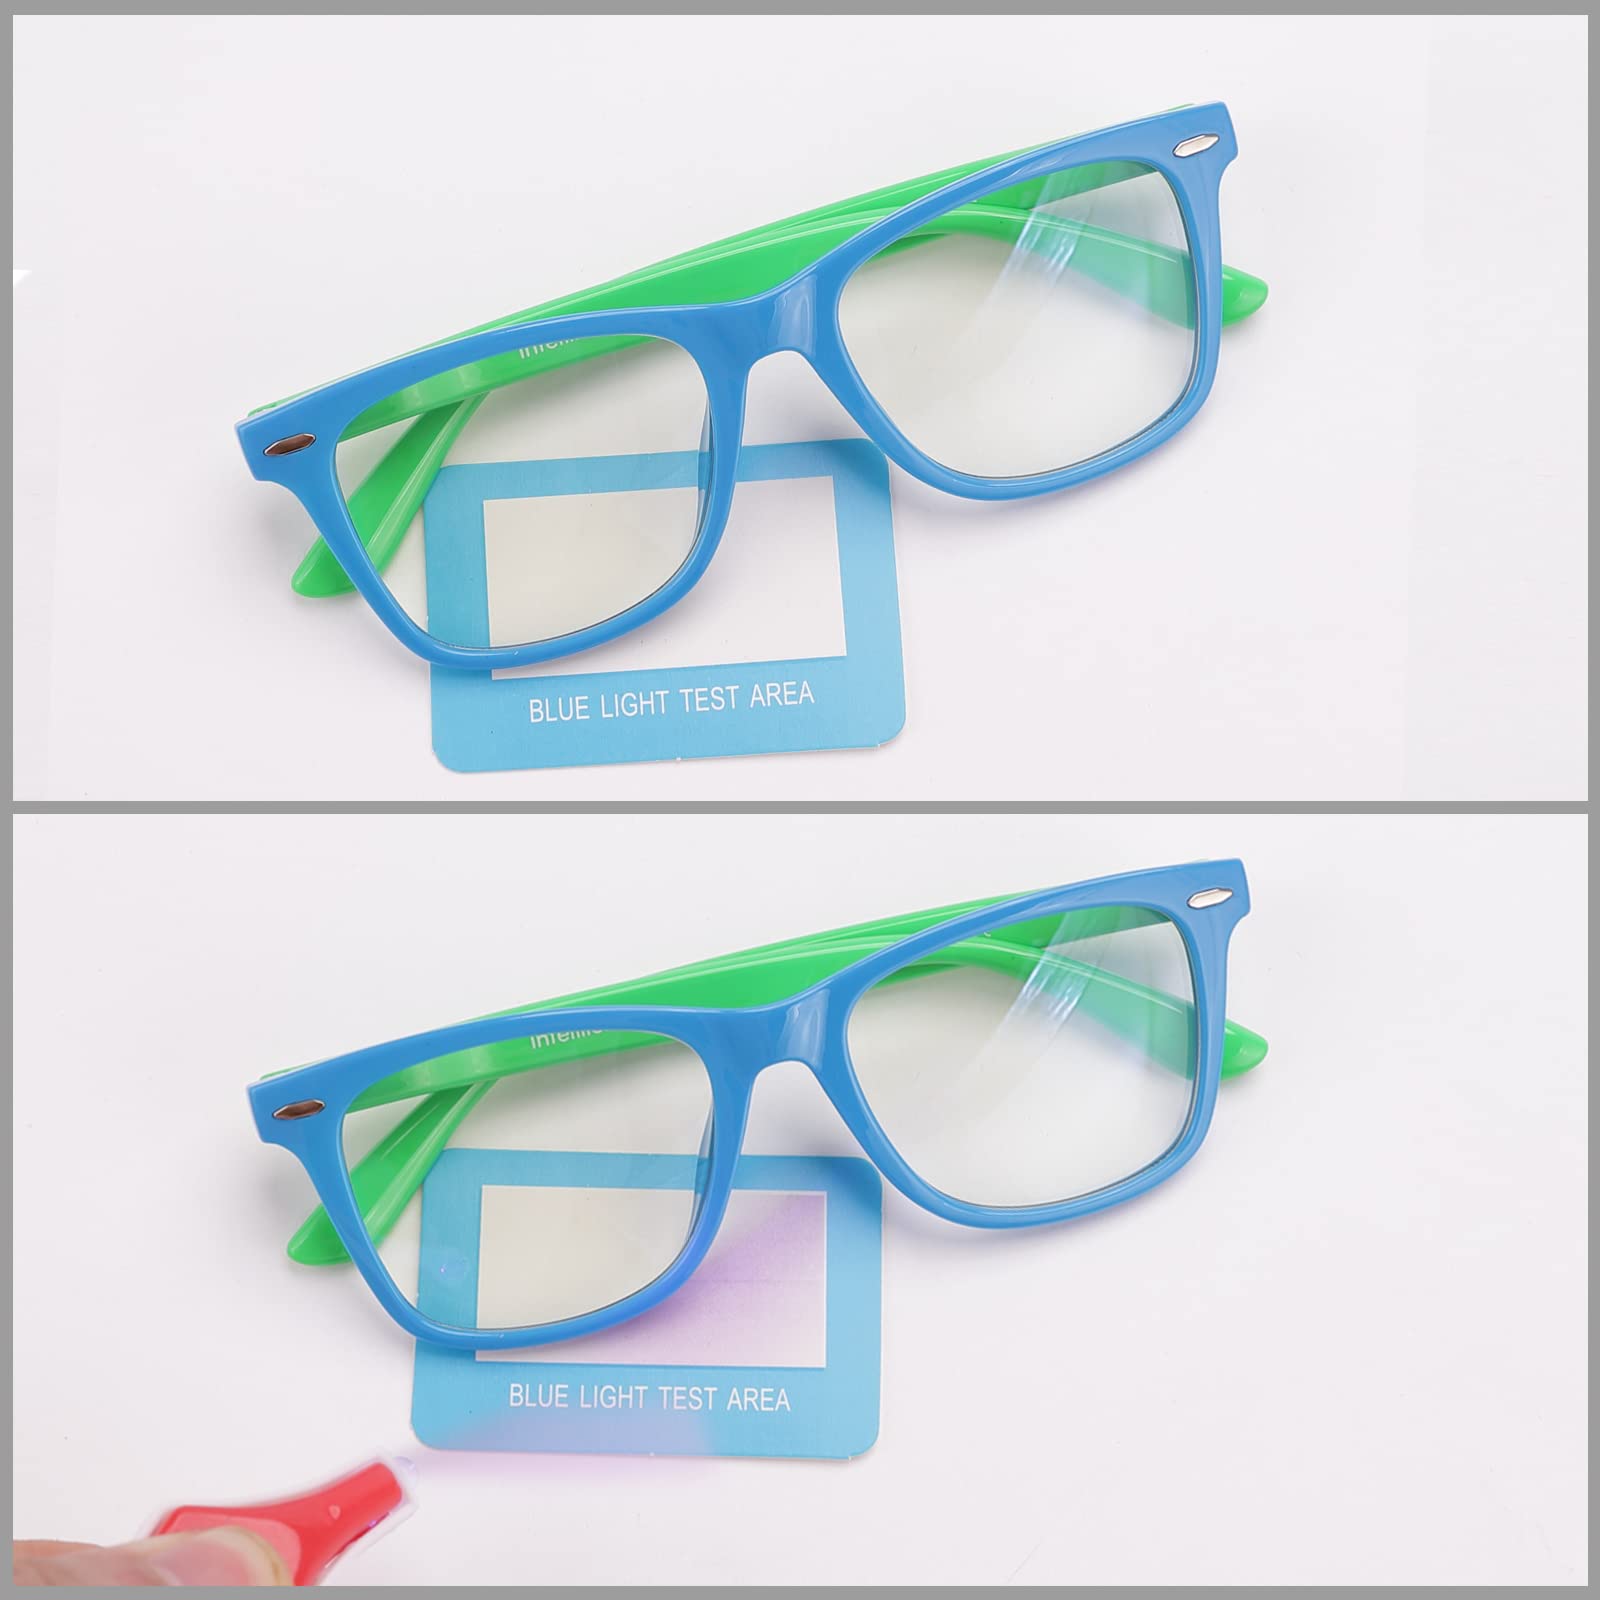 Intellilens Wayfarer Kids Computer Glasses for Eye Protection with Lens Cleaner Solution for Spectacles | Zero Power, Anti Glare & Blue Light Filter Glasses | (Blue) (48-17-130)